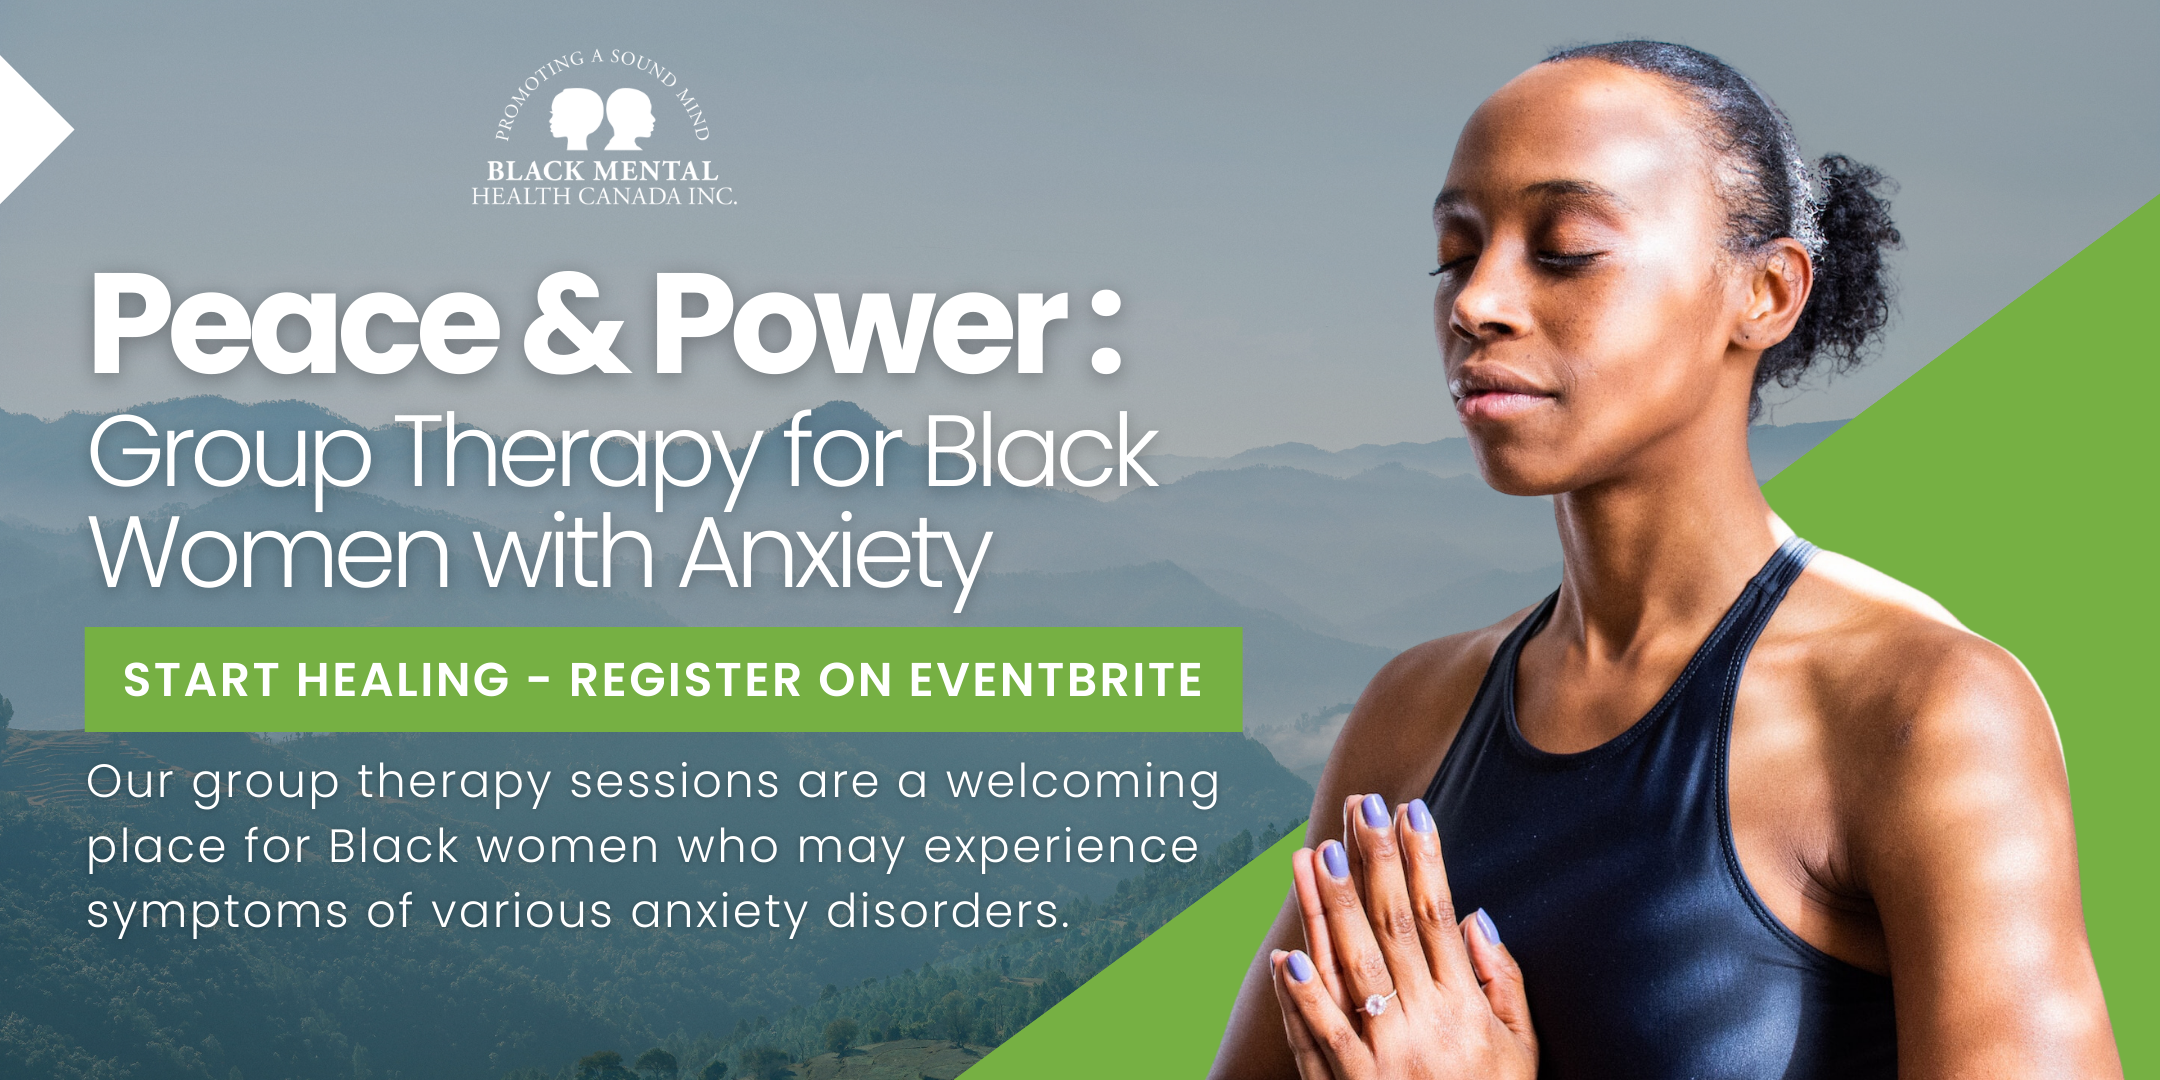 black mental wellness Black Mental Health Canada